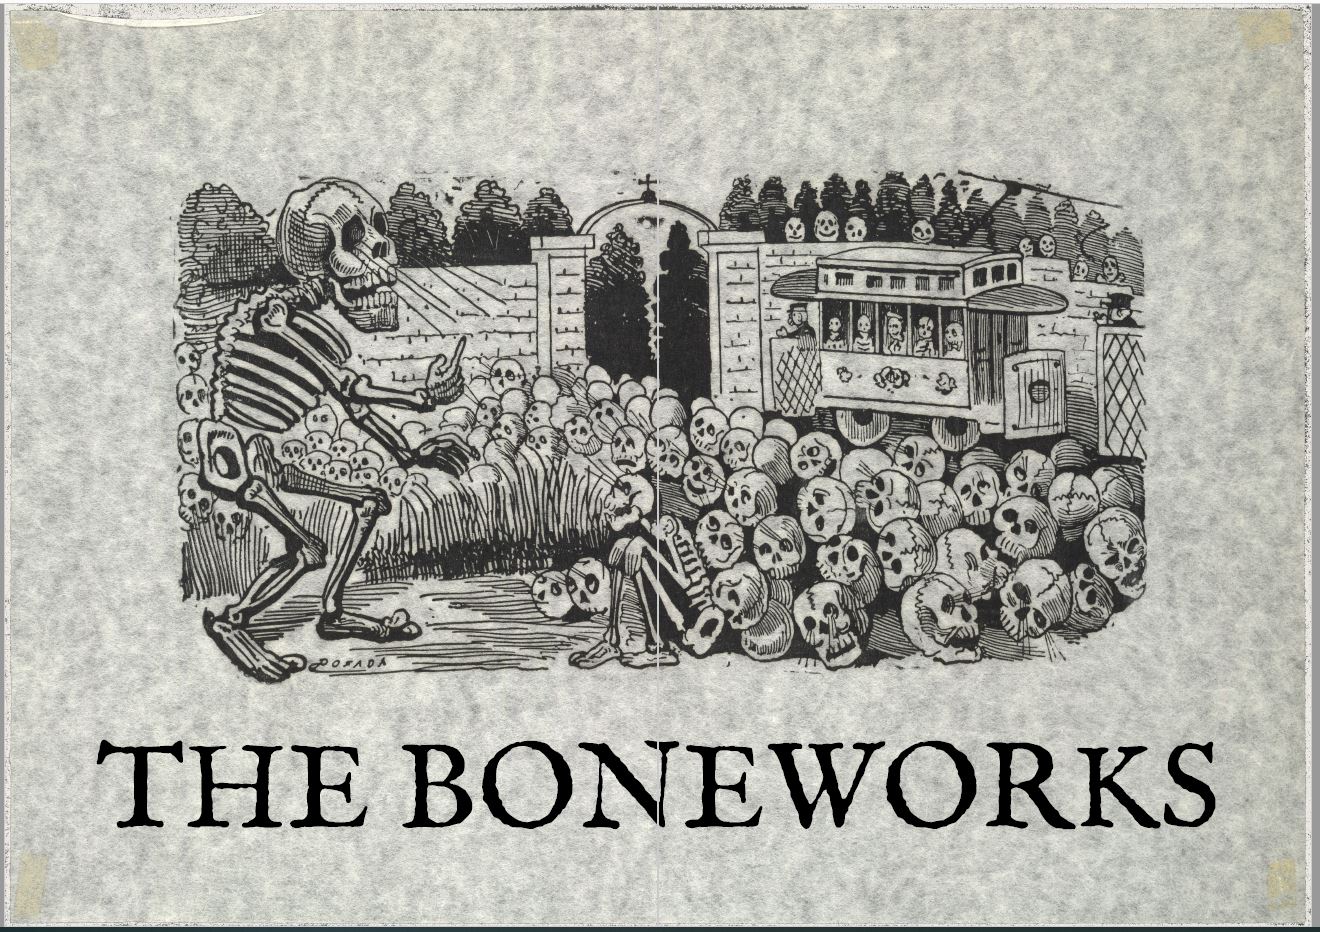 The Boneworks